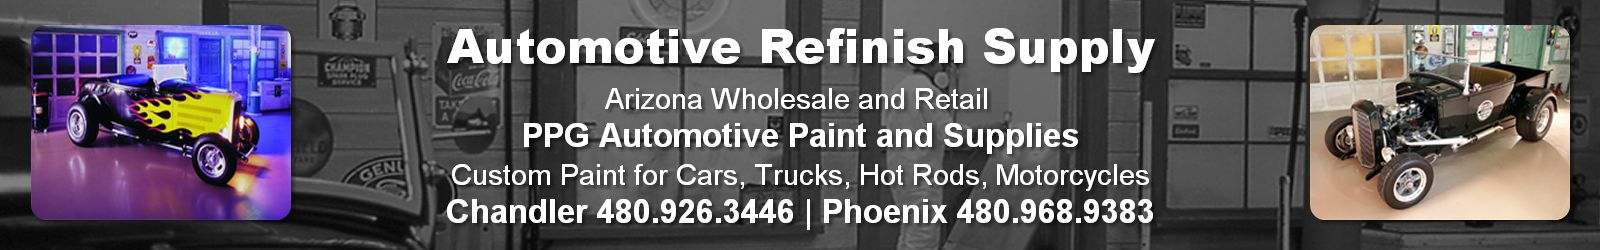 Automotive Refinish Supply - Chandler, Arizona 